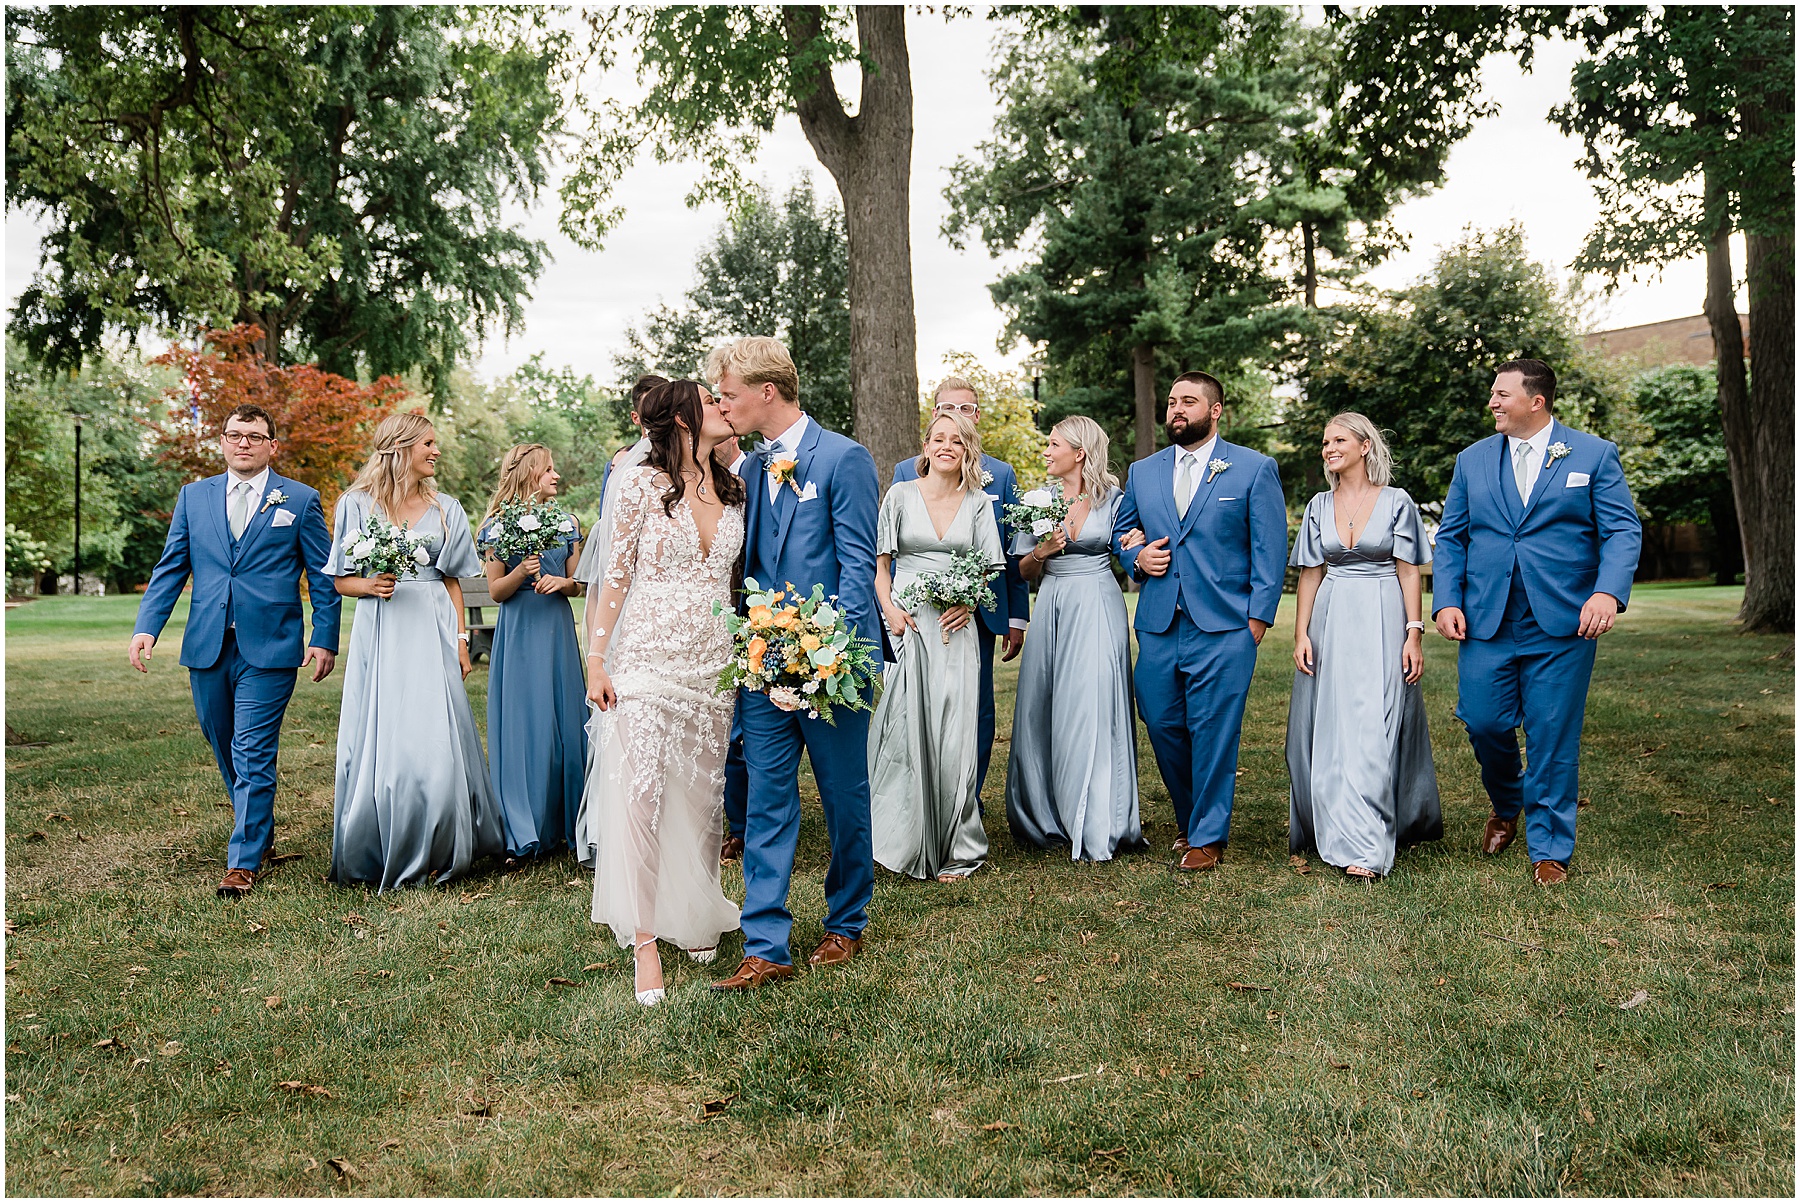 Fort Wayne wedding photographers capture bride and groom walking with wedding party